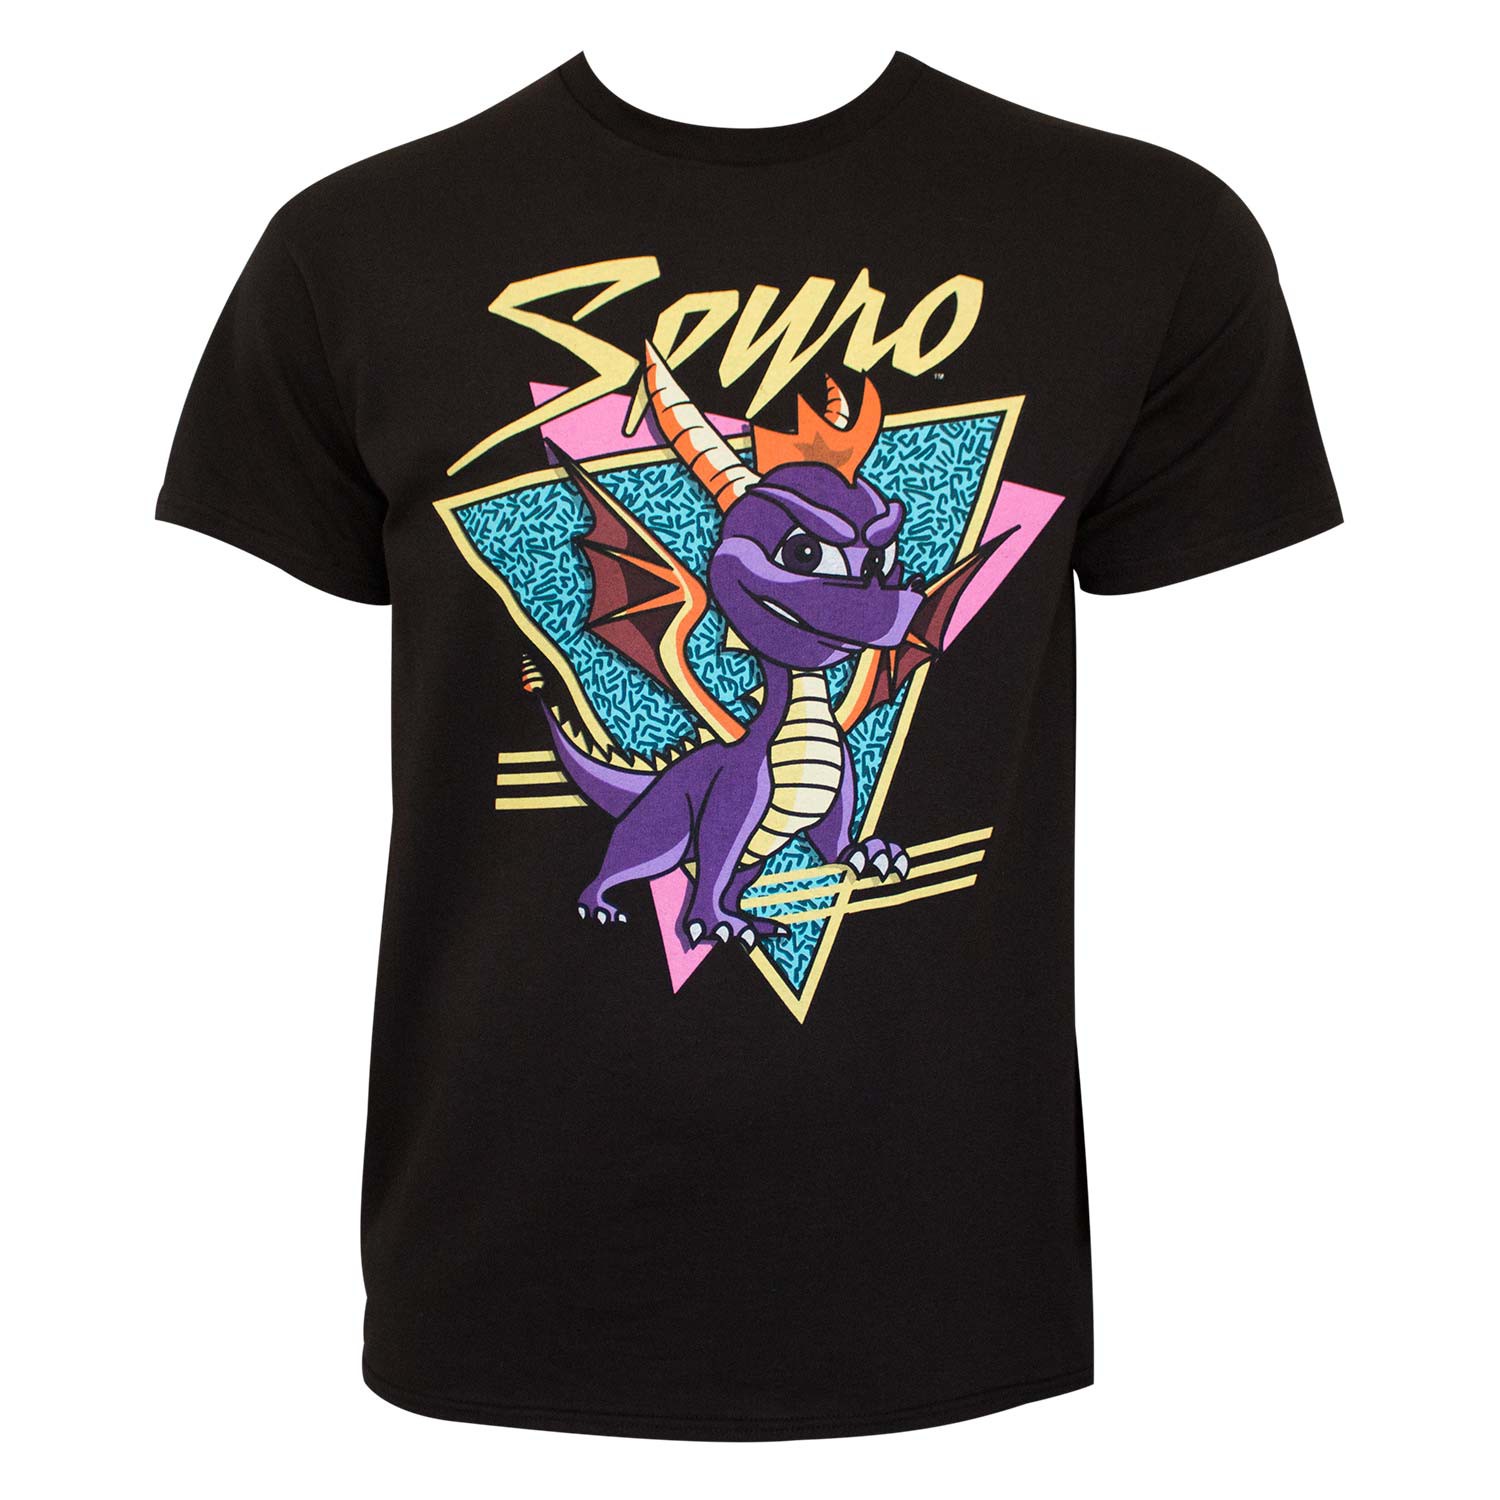 Spyro The Dragon Retro Logo Black Tee Shirt